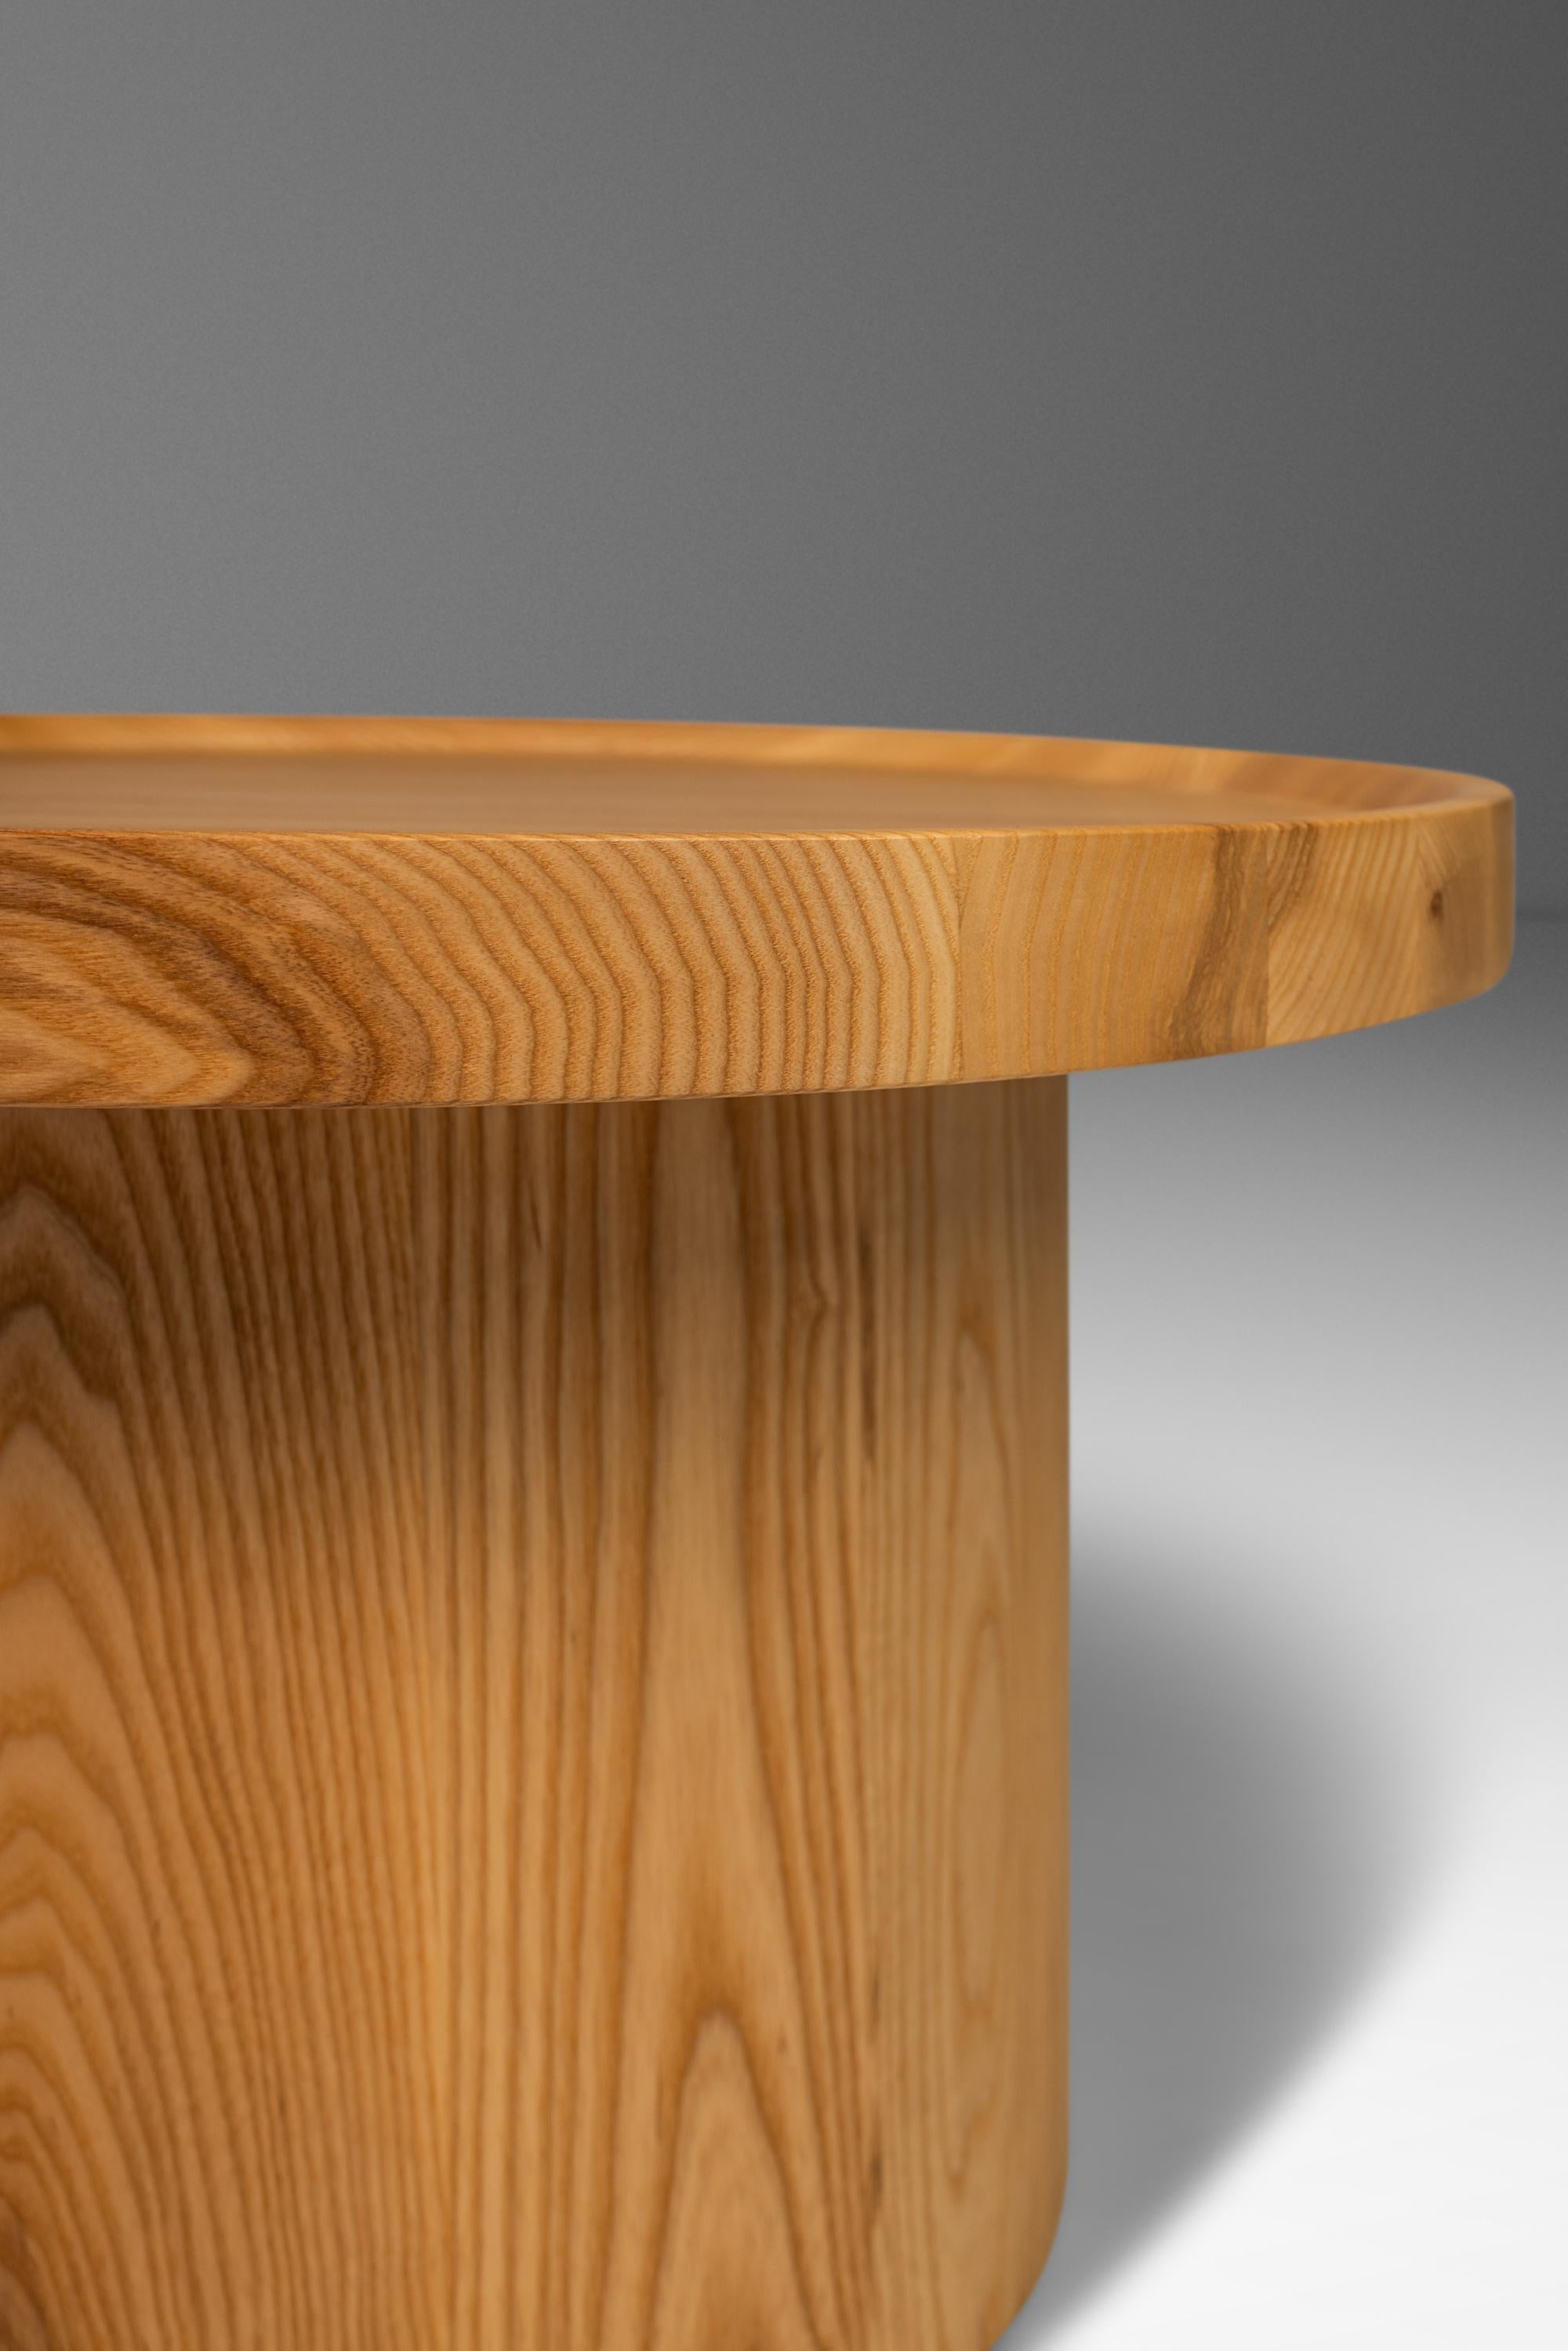 Frêne Table basse moderne organique Studio Craft en frêne massif de Mark Leblanc, États-Unis en vente